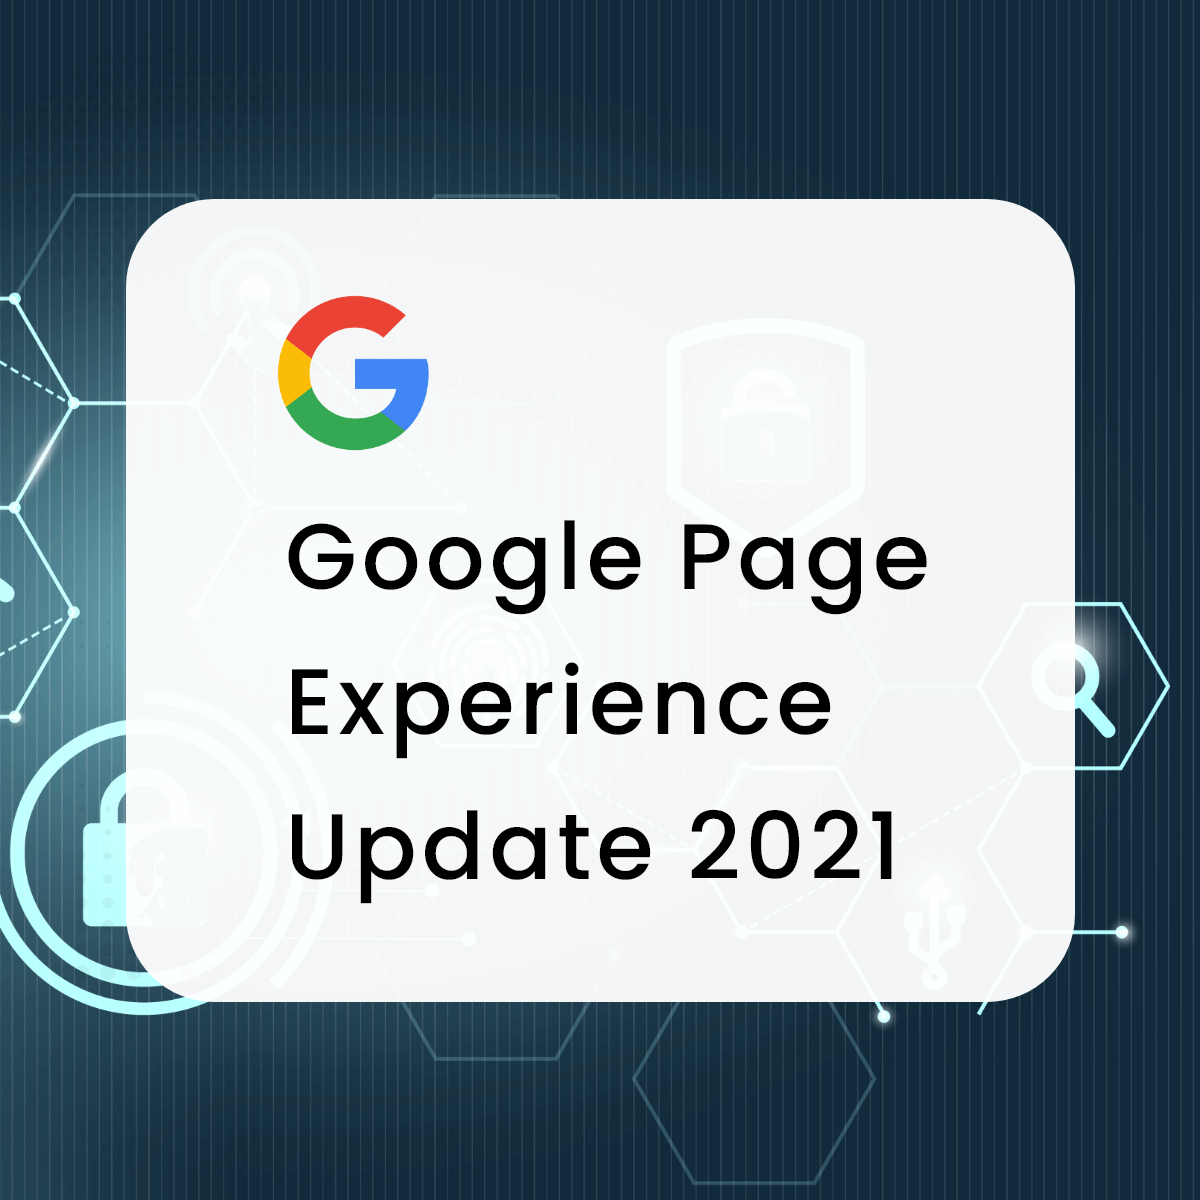 Google Page Experience Update 2021 - Key Takeaways